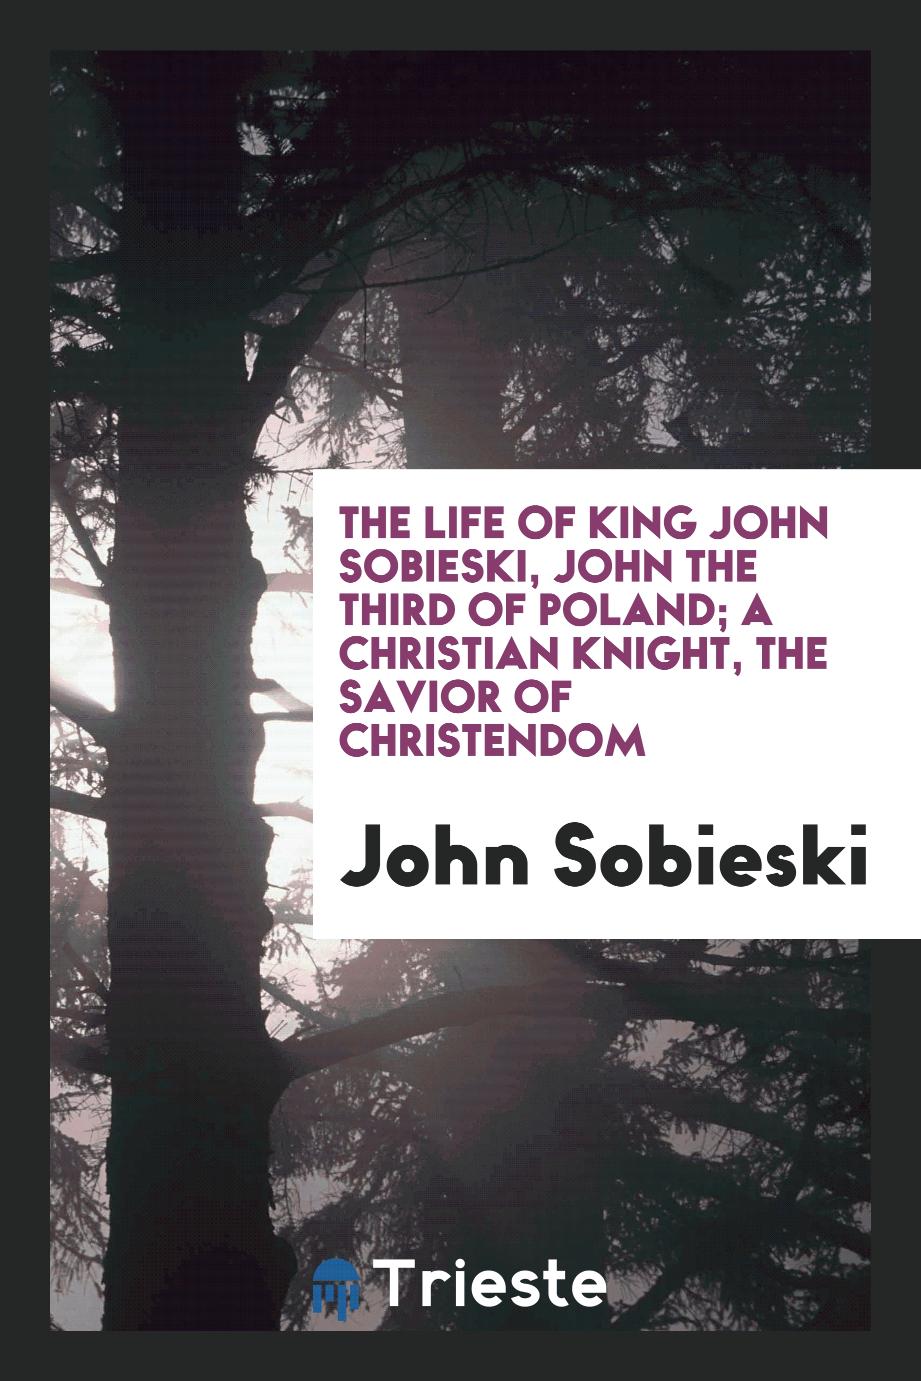 The life of King John Sobieski, John the Third of Poland; a Christian knight, the savior of Christendom